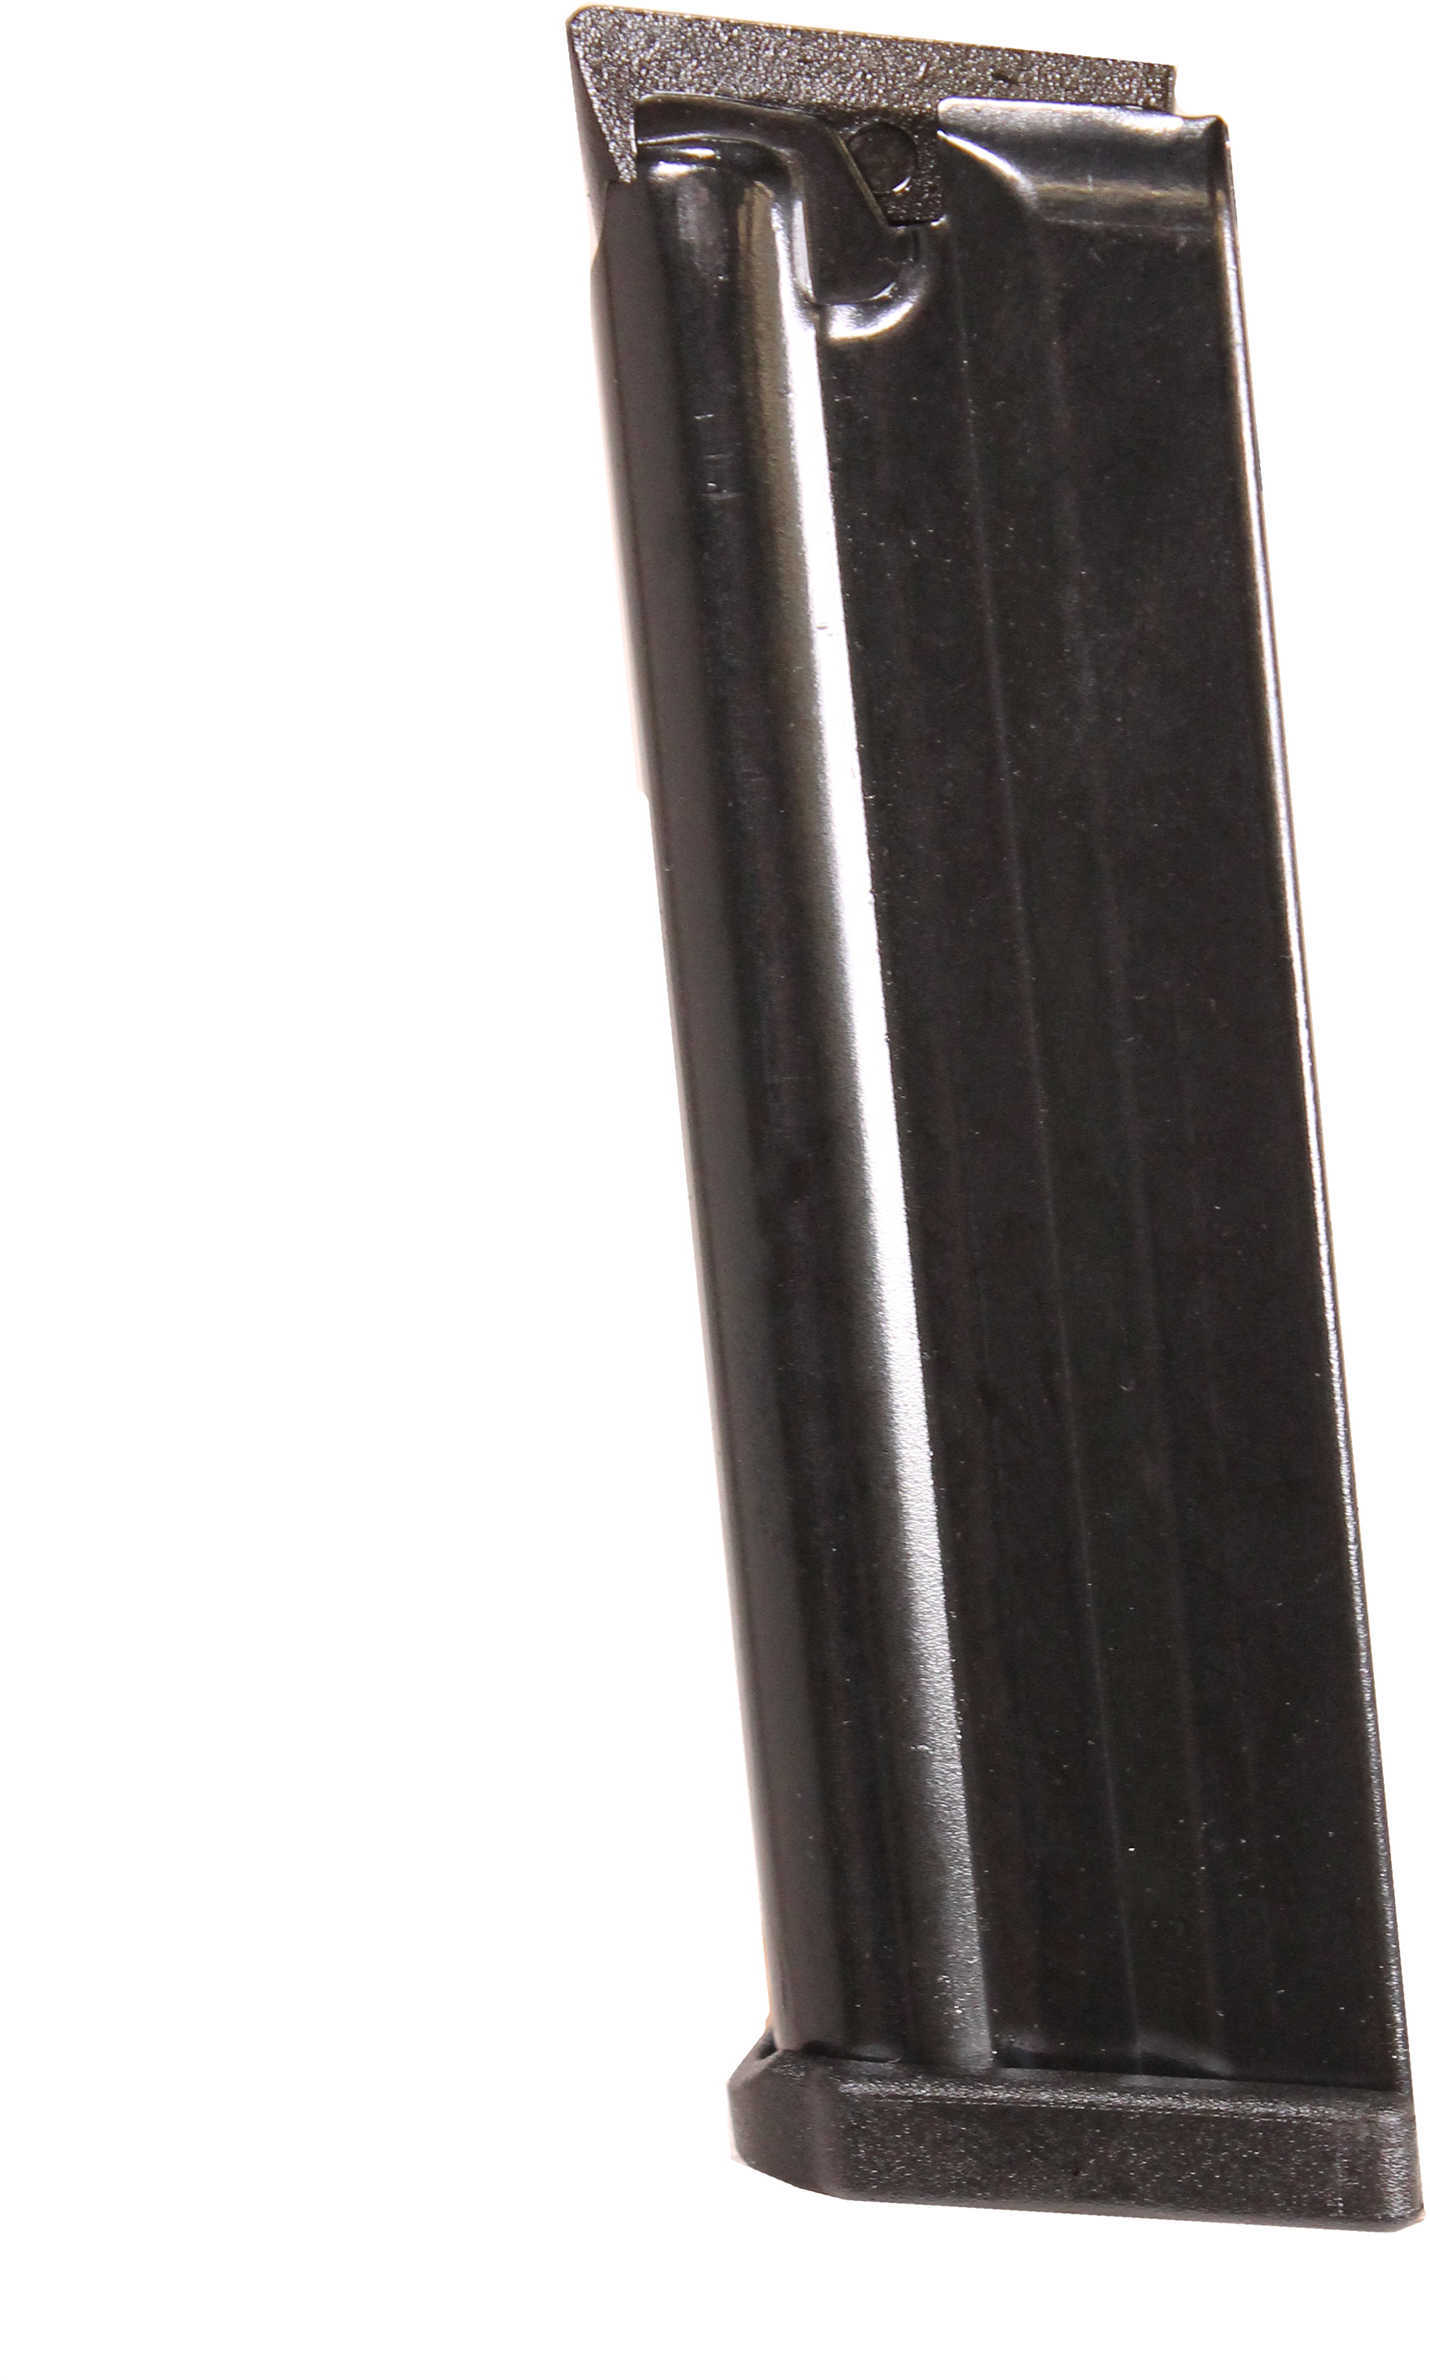 ProMag MOS01 Mossberg 702 Plinkster 22 LR 10 Round Steel Black Finish